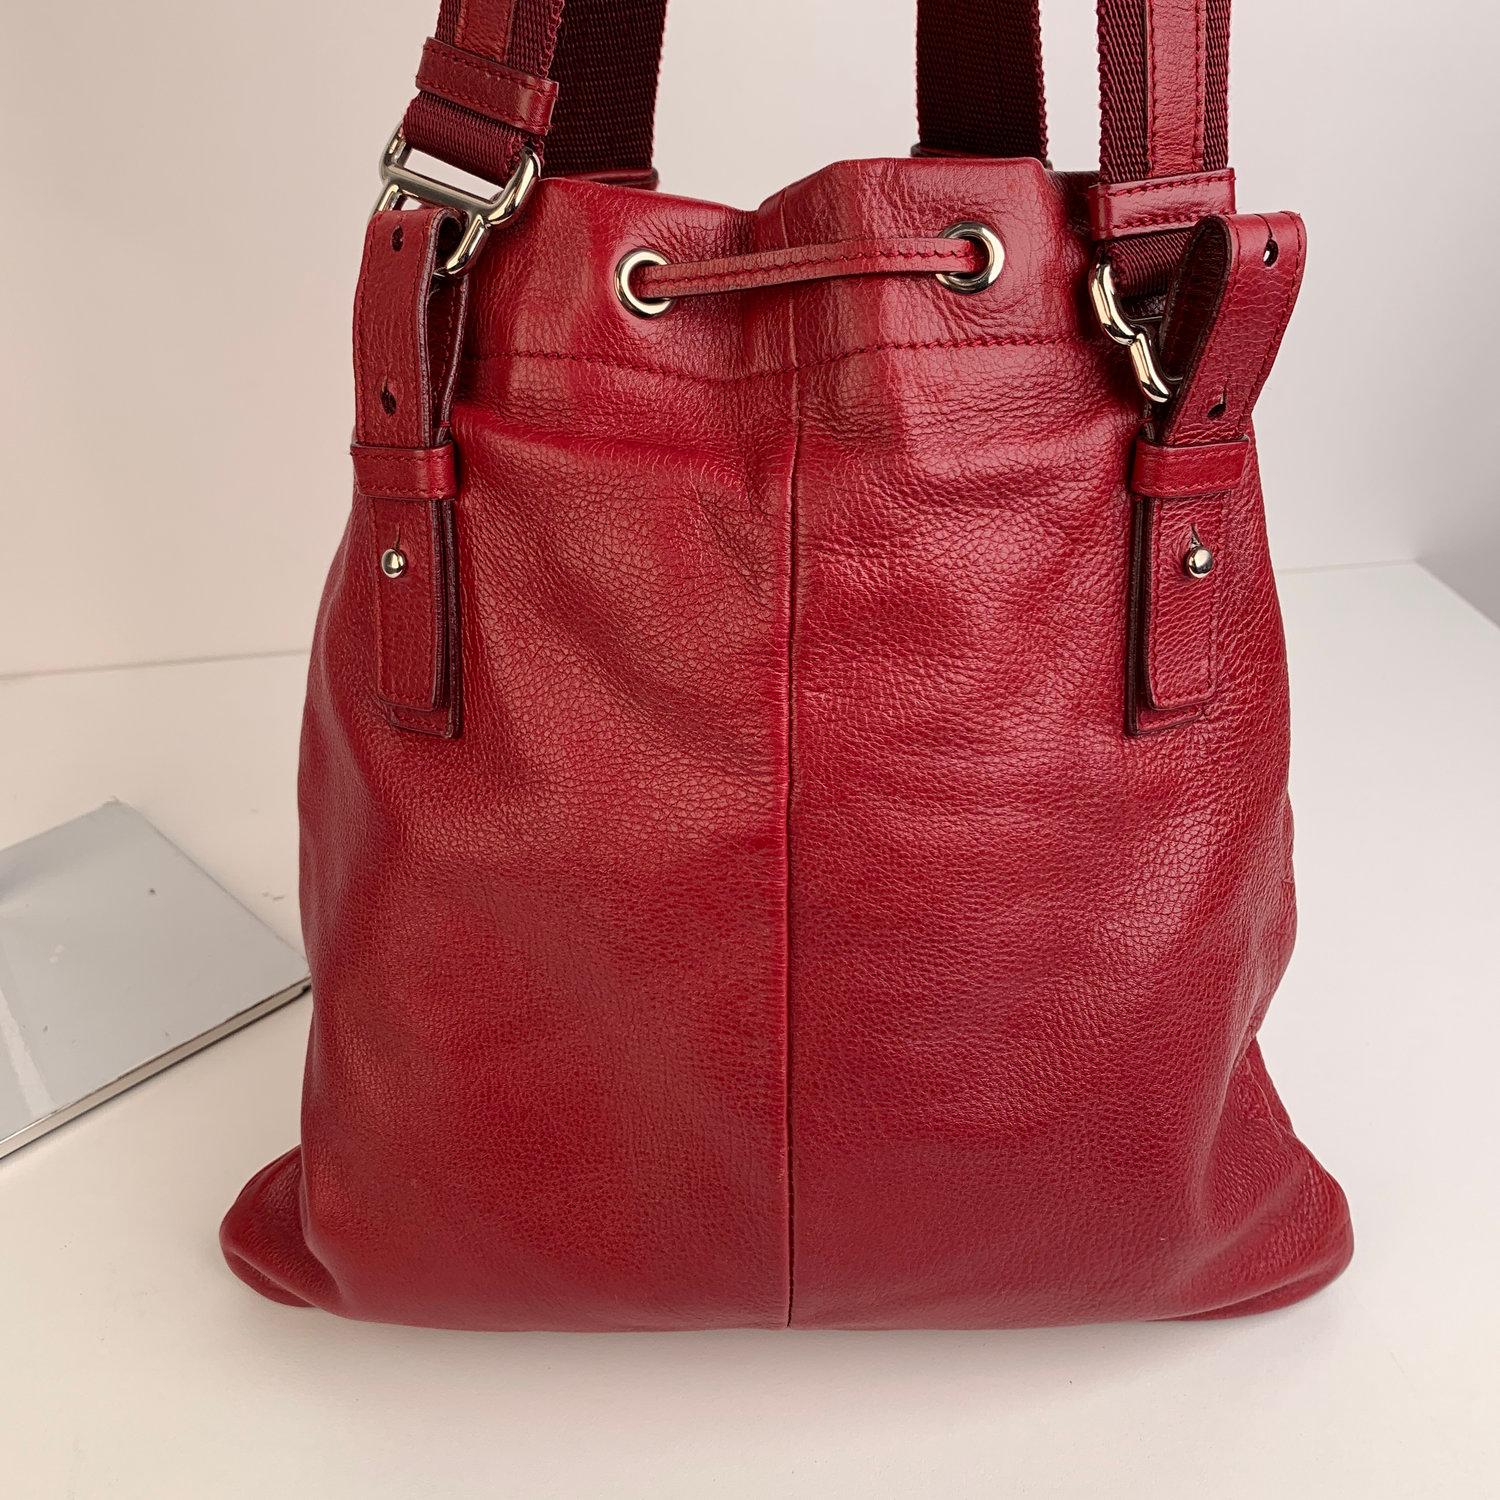 Yves Saint Laurent Red Leather Small Kahala Sac Tote Bag 1